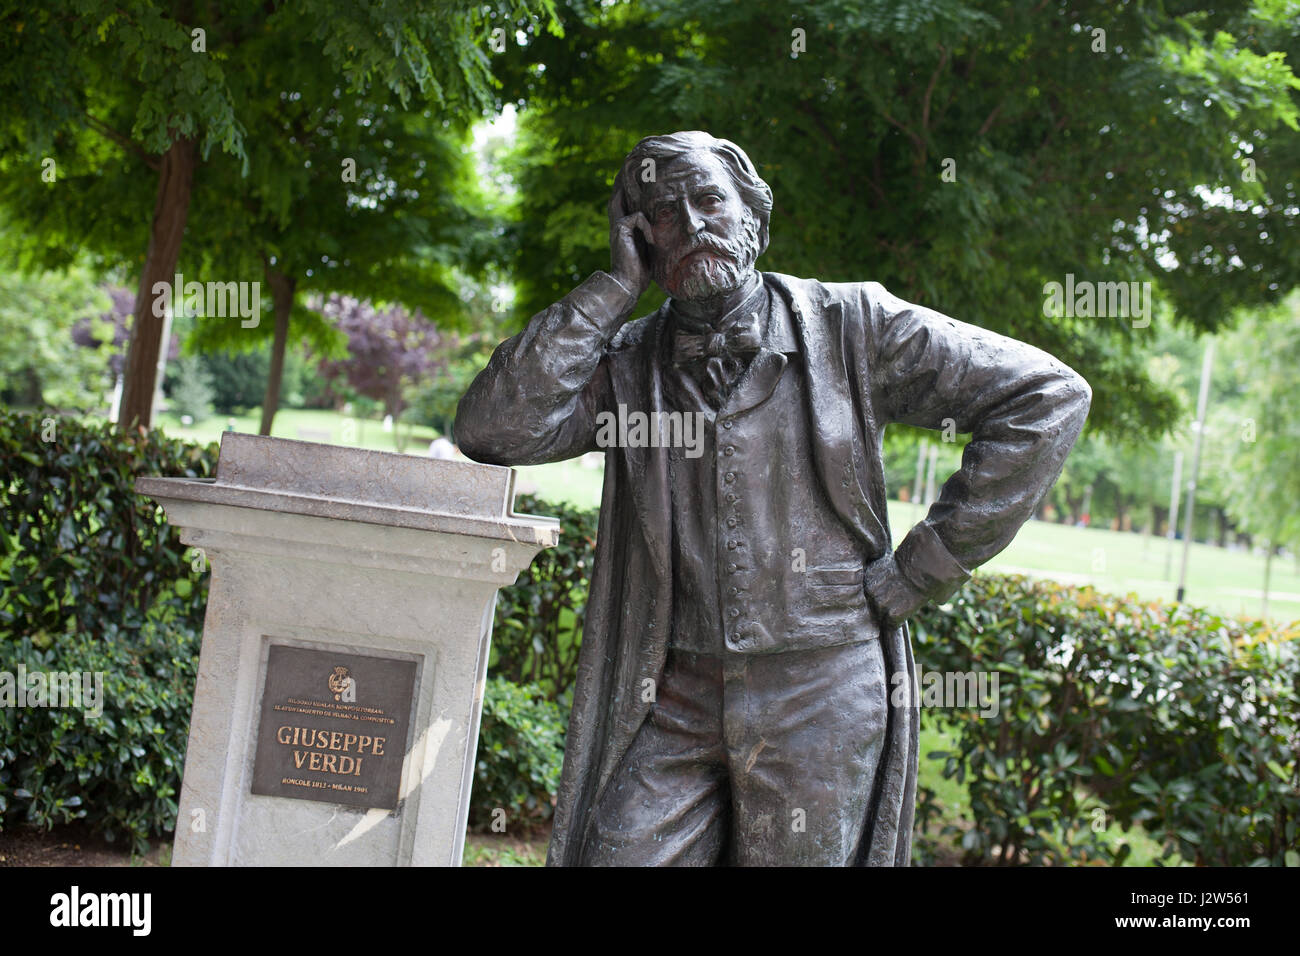 Statue of Giuseppe Verdi in the Doña Casilda park, Bilbao. Stock Photo